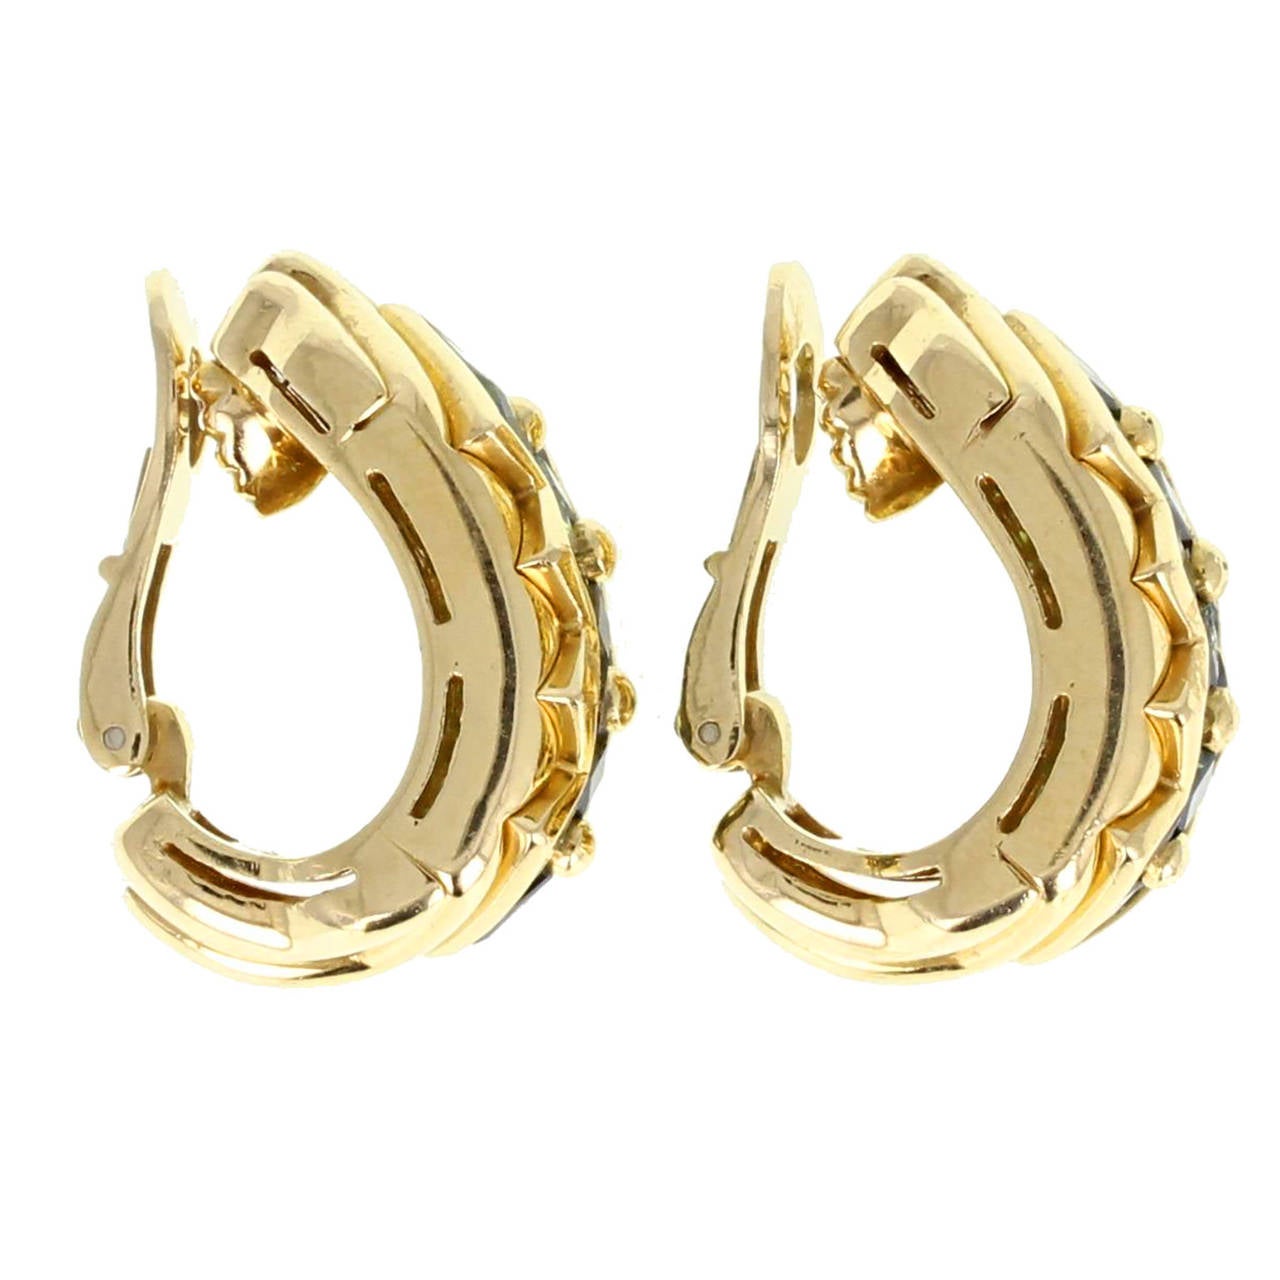 Bulgari Green Tourmaline Gold Hoop Earrings For Sale at 1stdibs